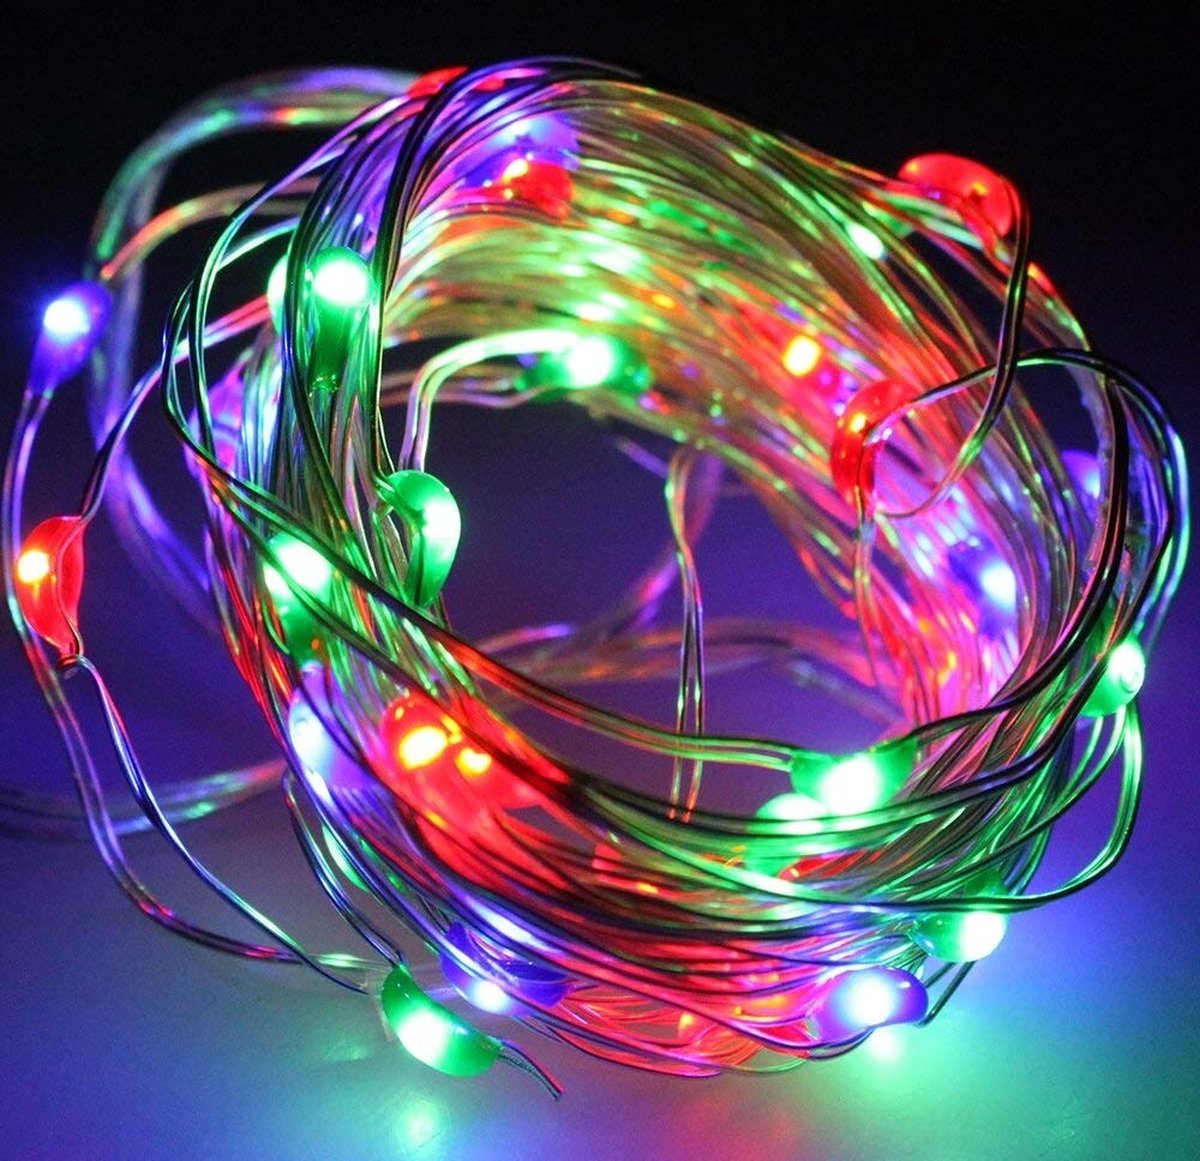 Gekleurde LED Haarlampjes (2 meter 20 LED) • Carnaval • Kerst • Trouwfeest • Warm Wit • Groen • Blauw • Wit • Rood • Roze • Multicolor • Paars